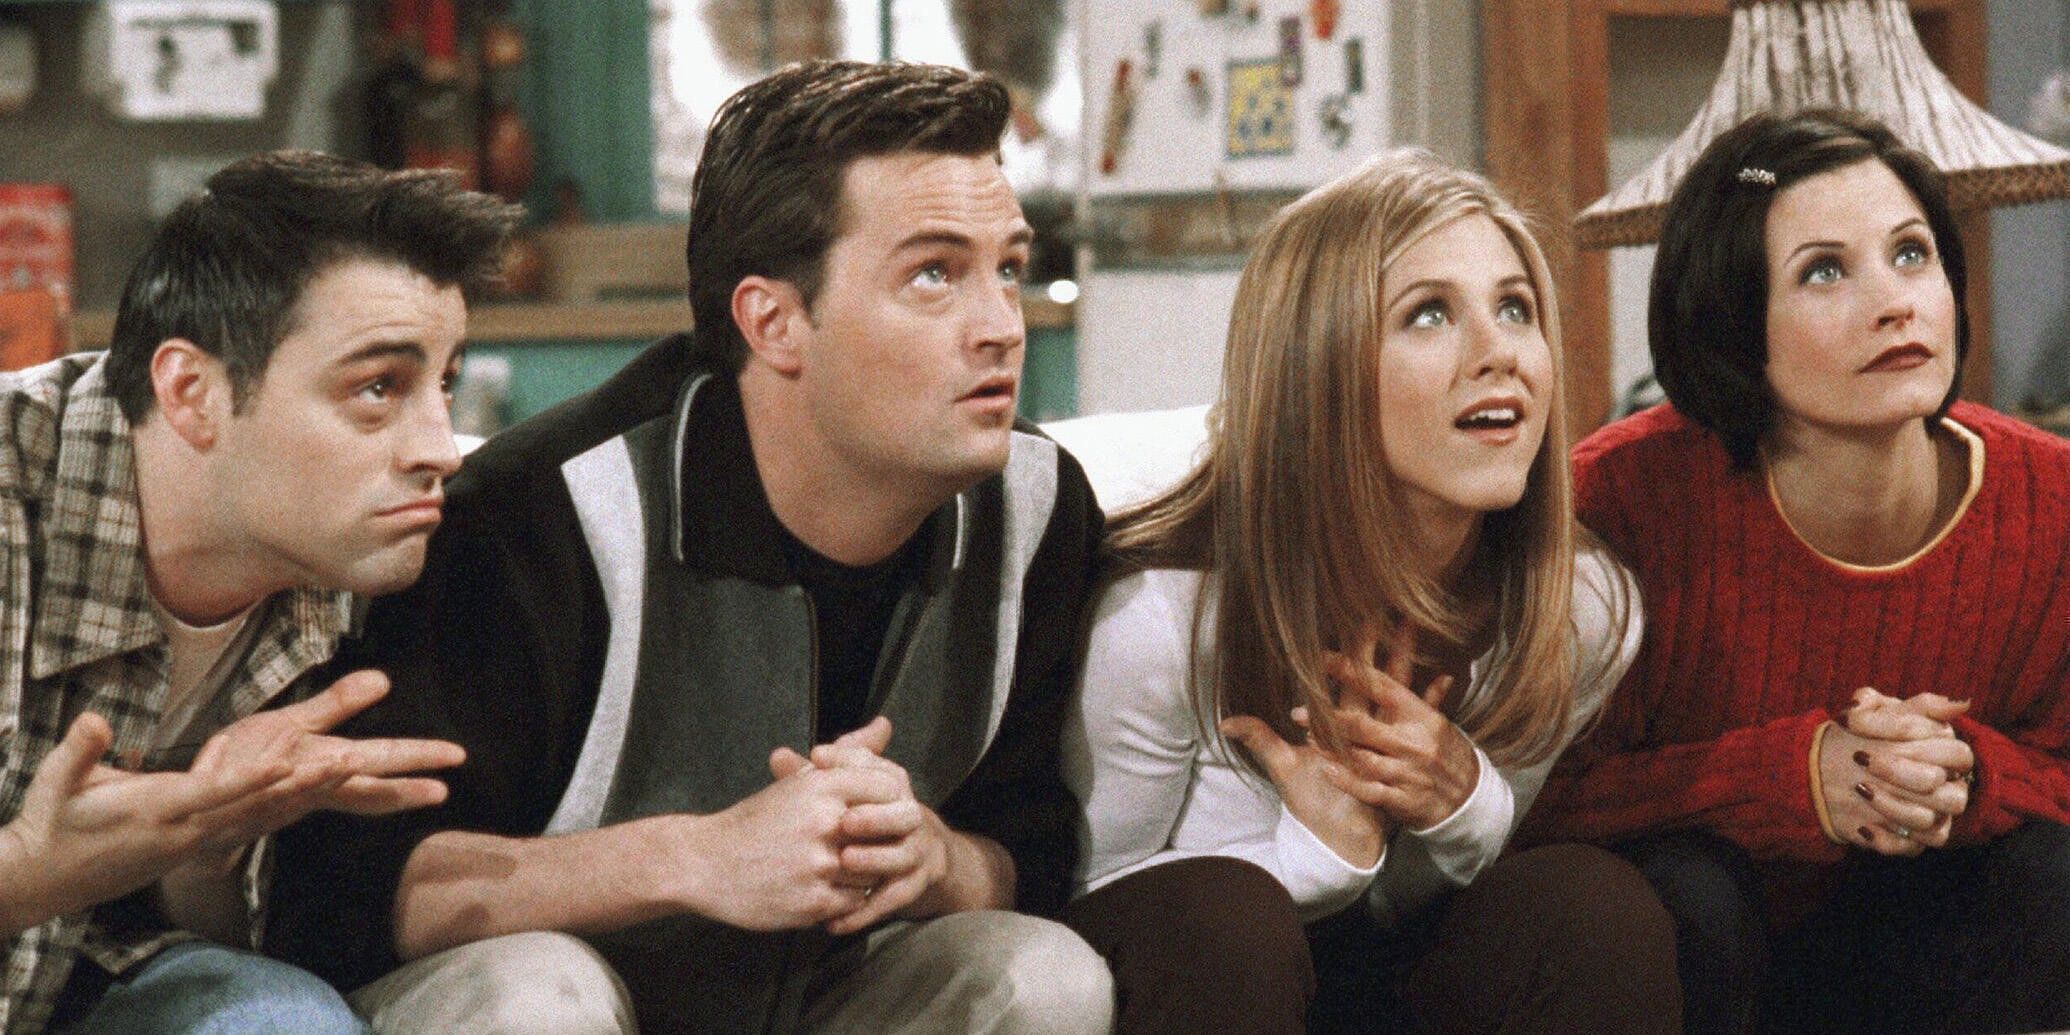 Joey, Chandler, Rachel and Monica play trivia on the sofa